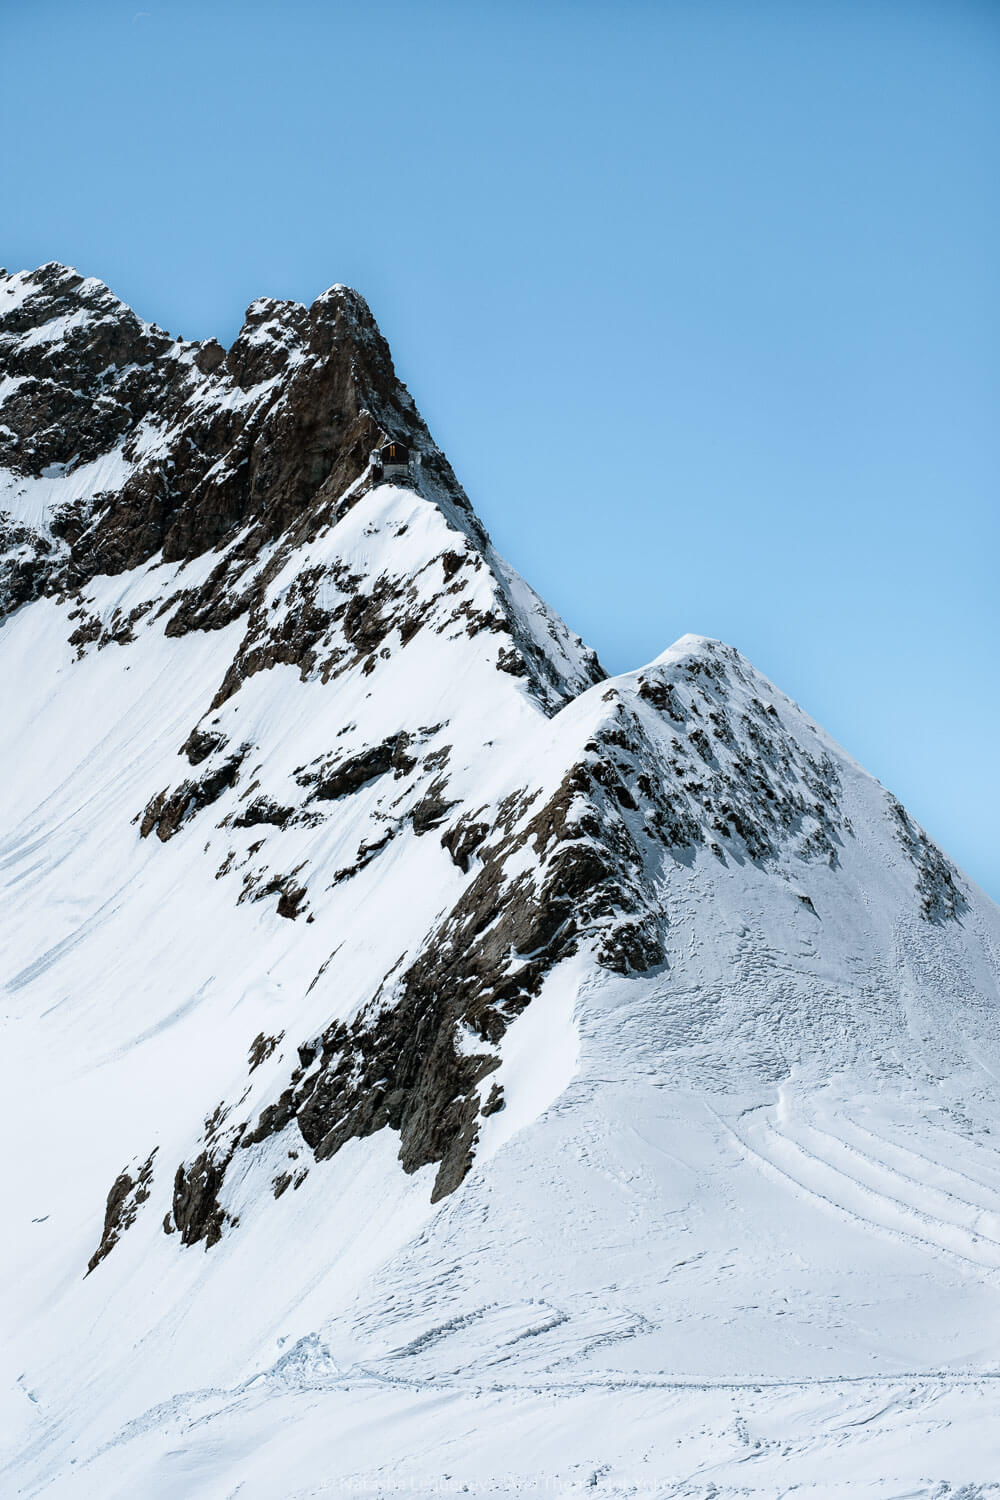 Views from Jungfraujoch, Switzerland. Travel photography and guide by © Natasha Lequepeys for "And Then I Met Yoko". #wengen #jungfraujoch #travelguide #switzerland #travelphotography